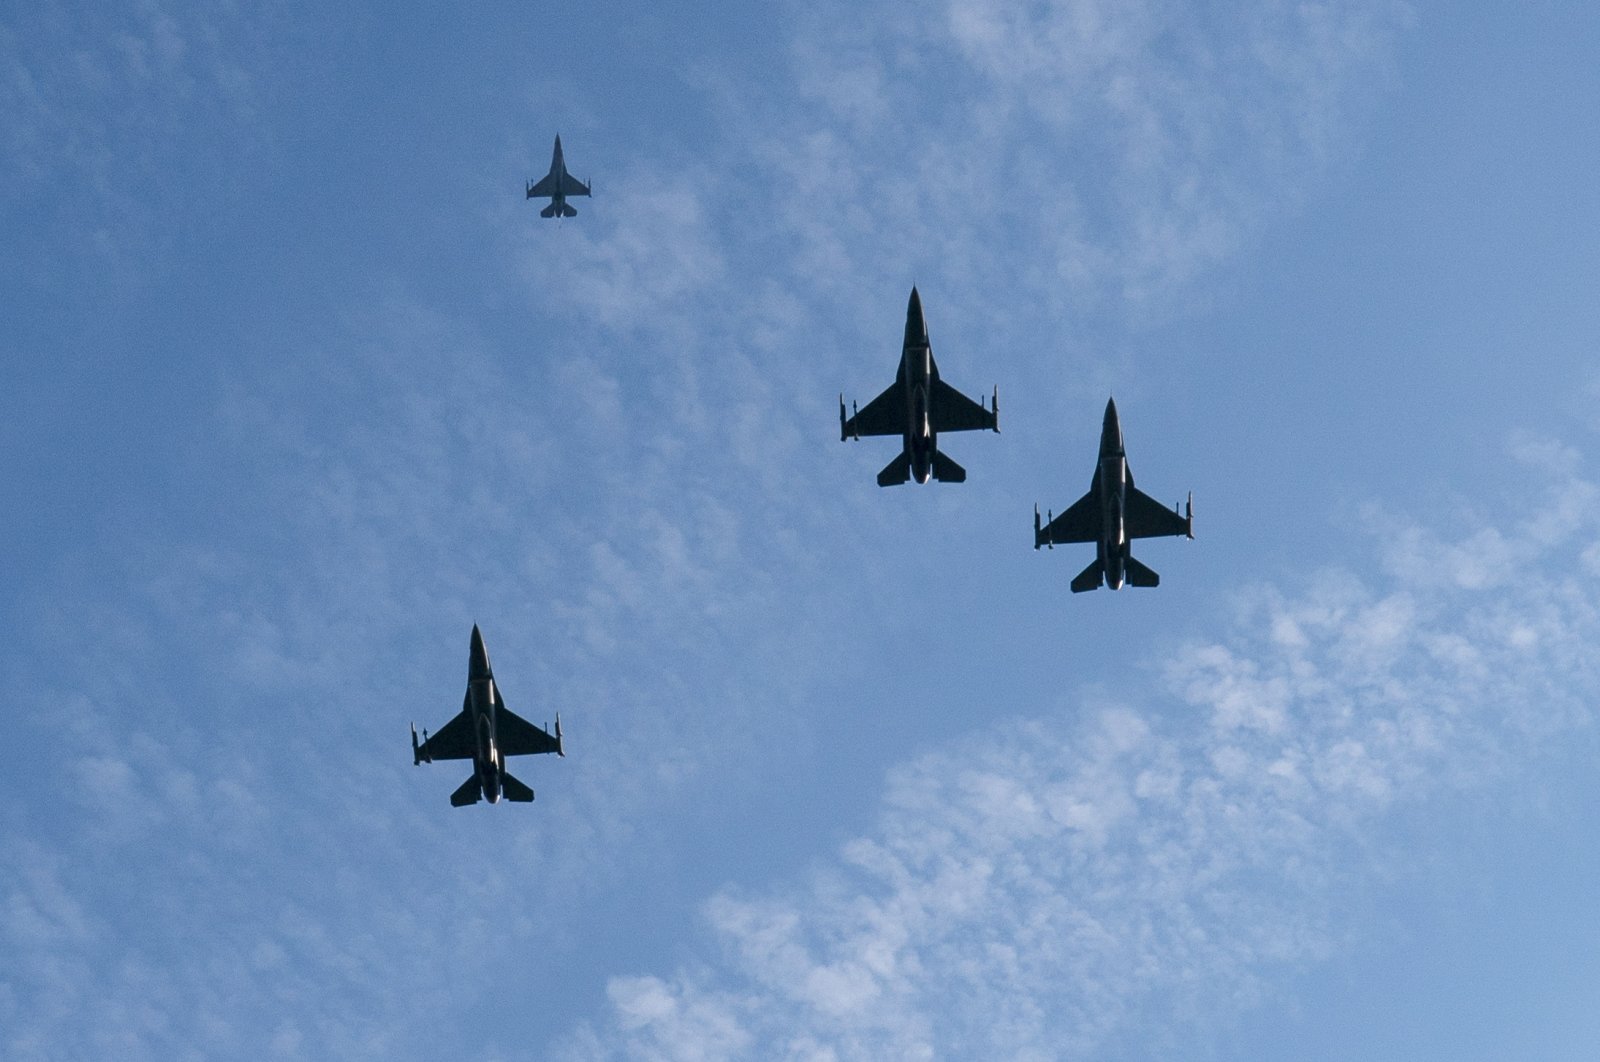 Turki akan mencari tempat lain jika AS melakukan pendekatan negatif terhadap F-16